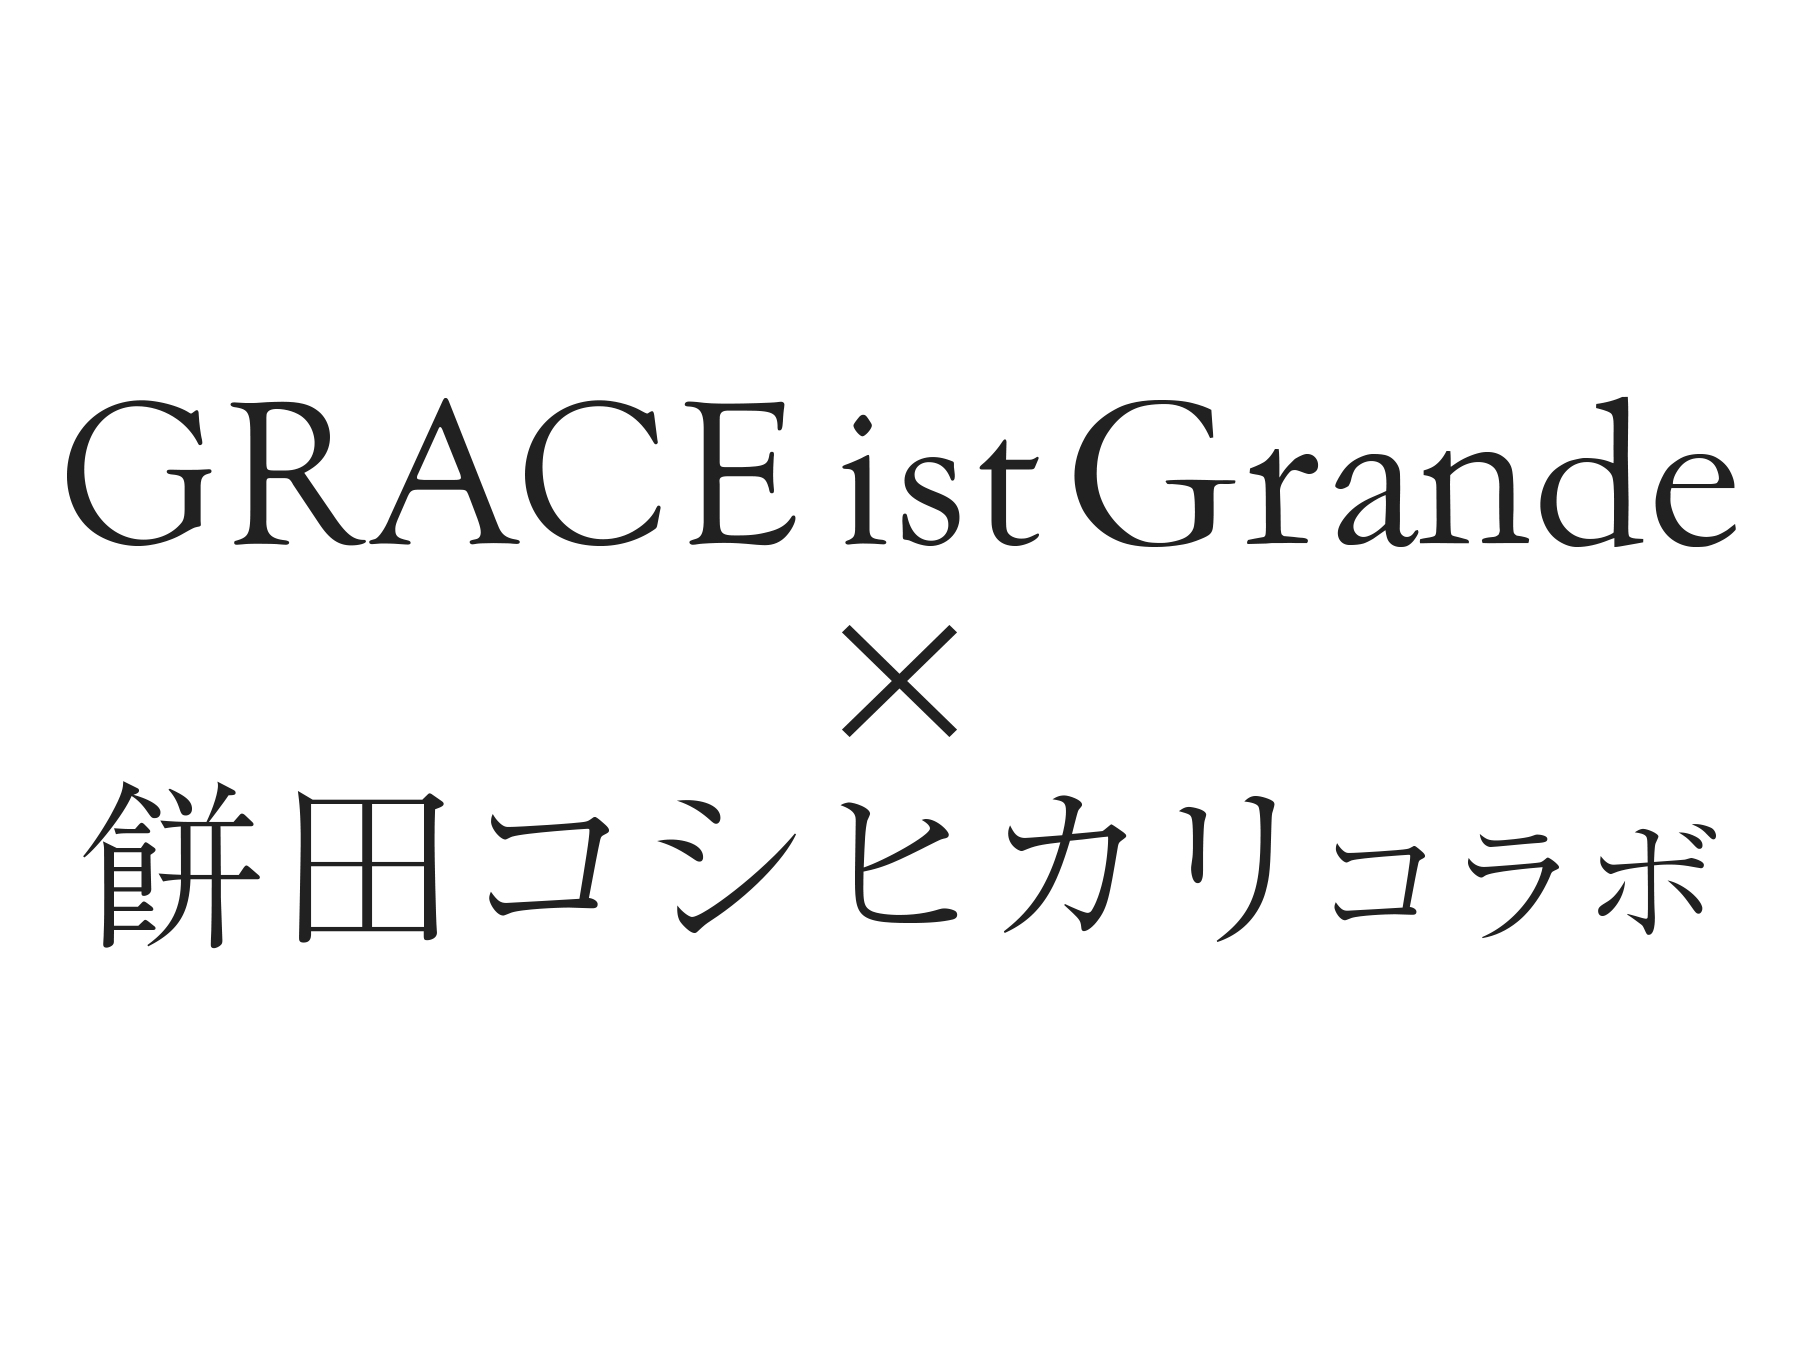 GRACEistGrande×餅田コシヒカリコラボ